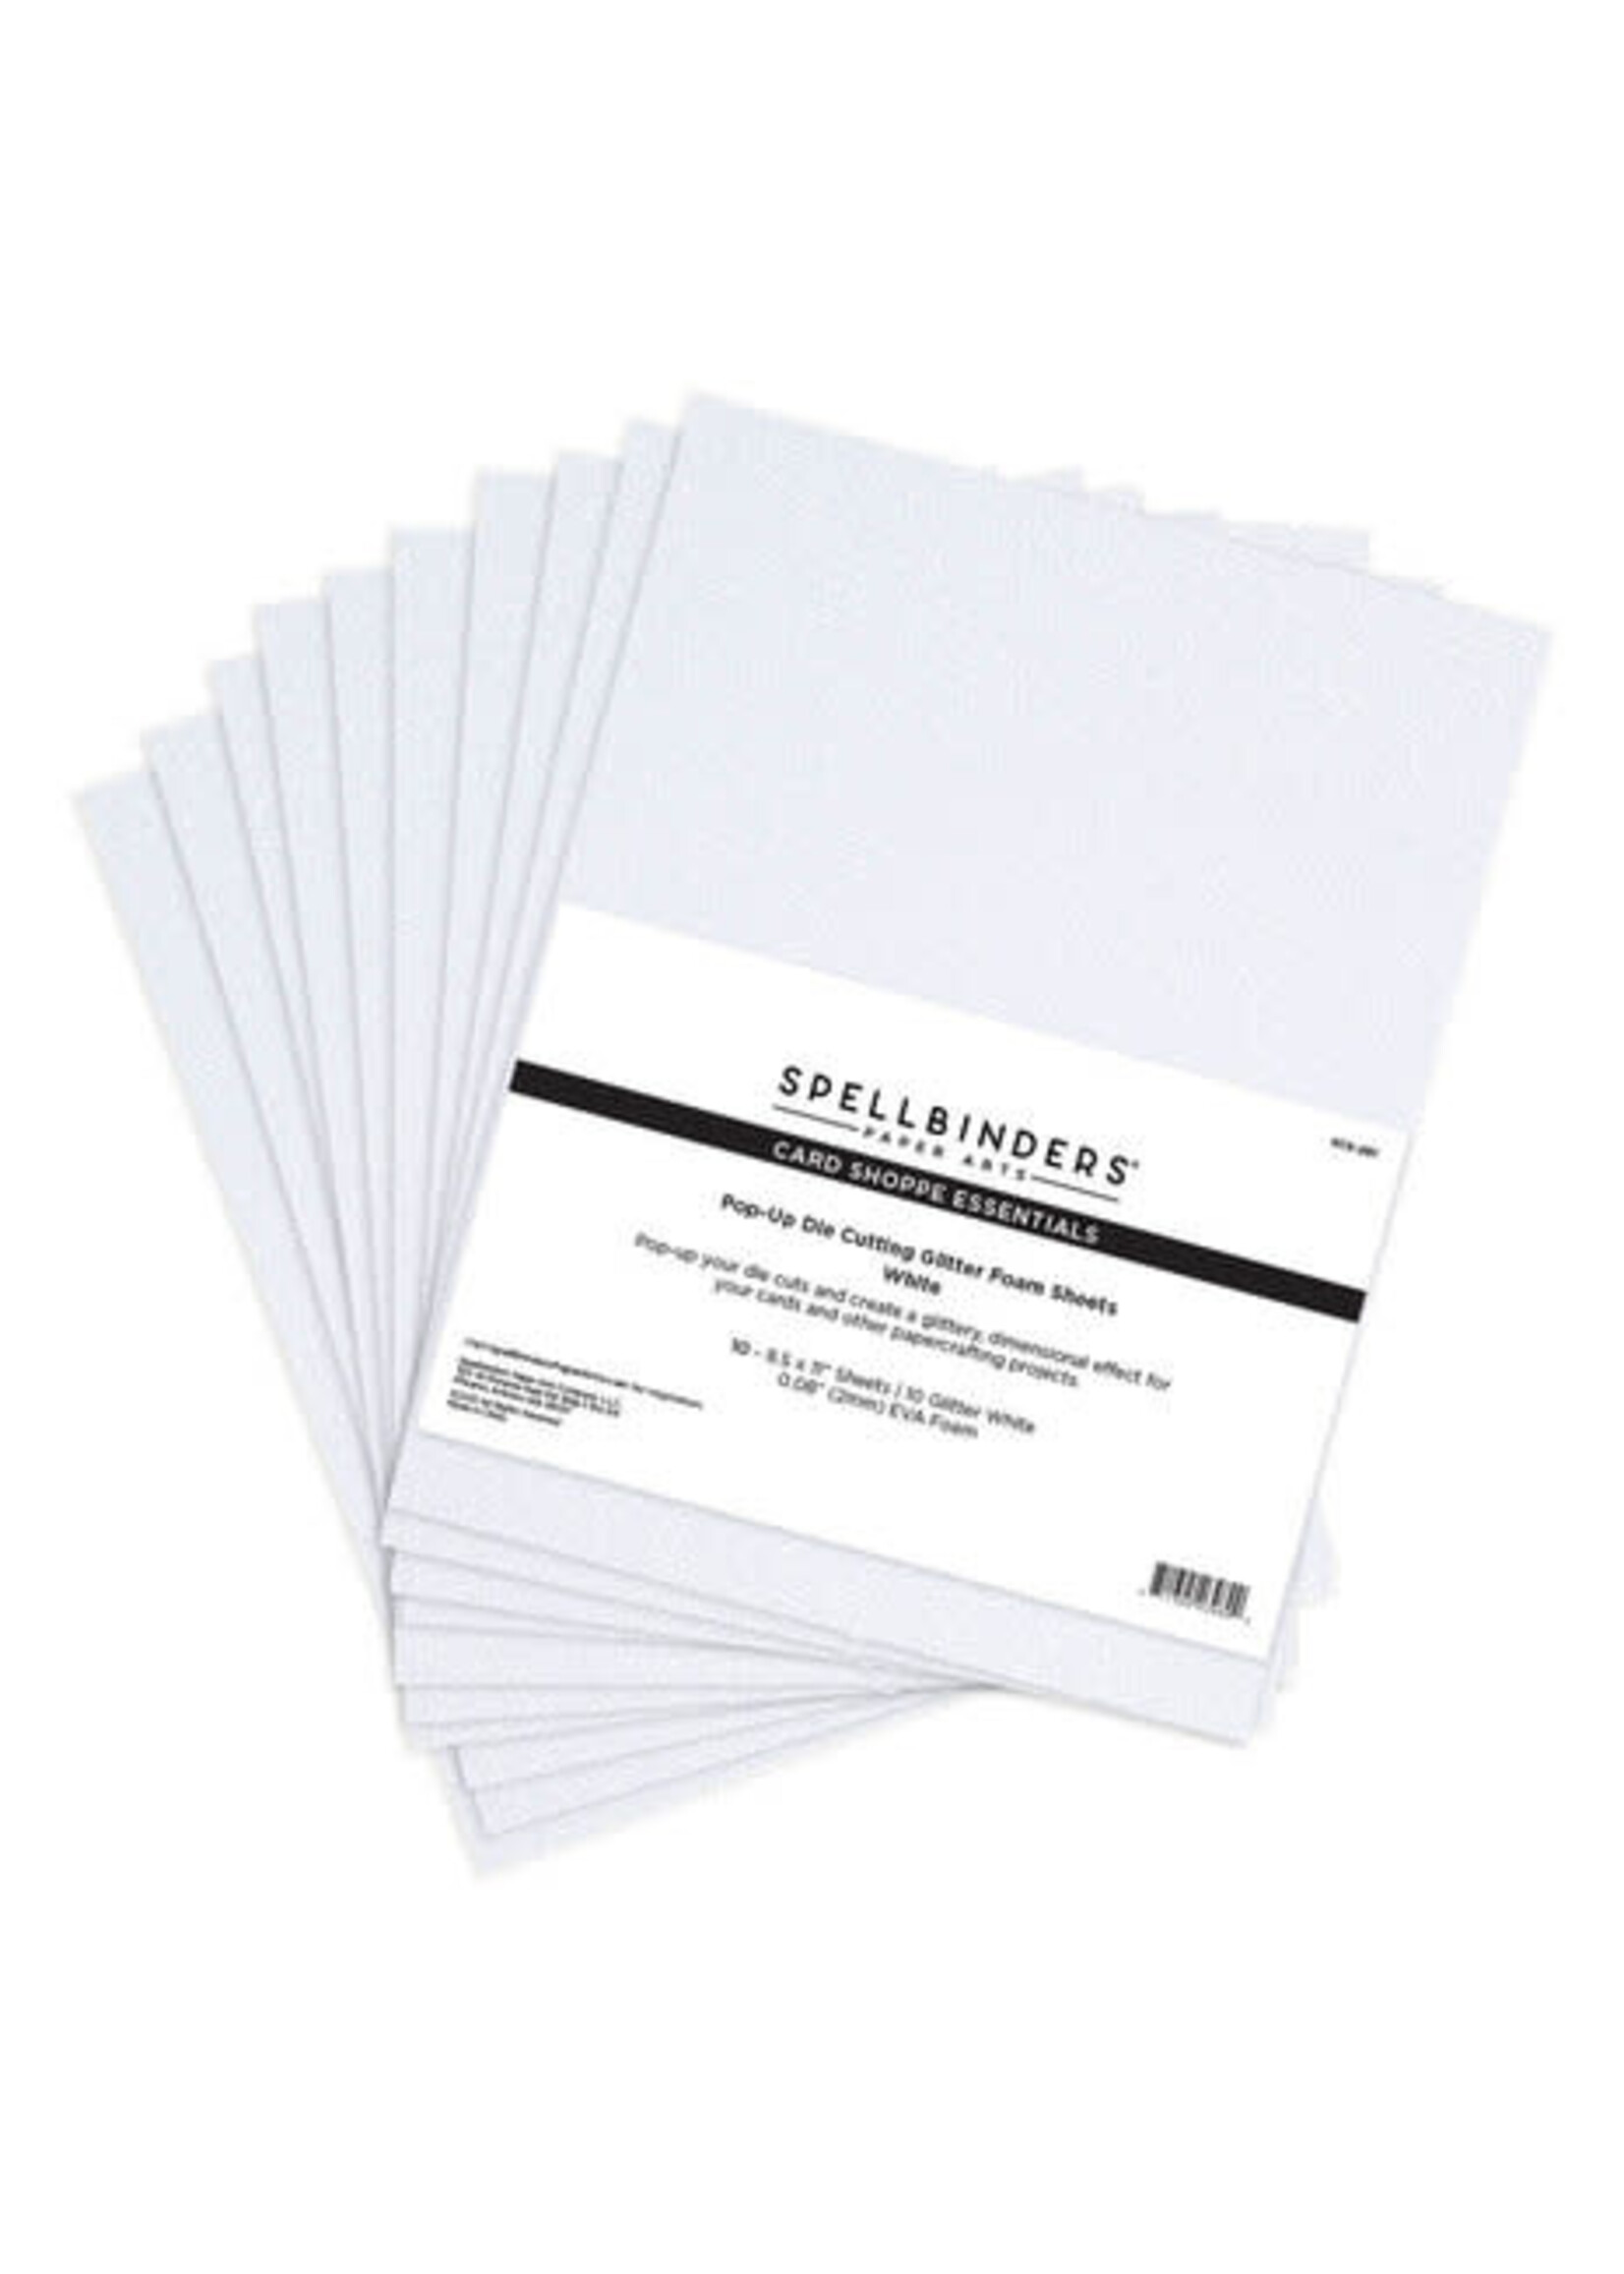 spellbinders Pop-Up Die Cutting Glitter Foam Sheets - White (10pcs) (SCS-291)